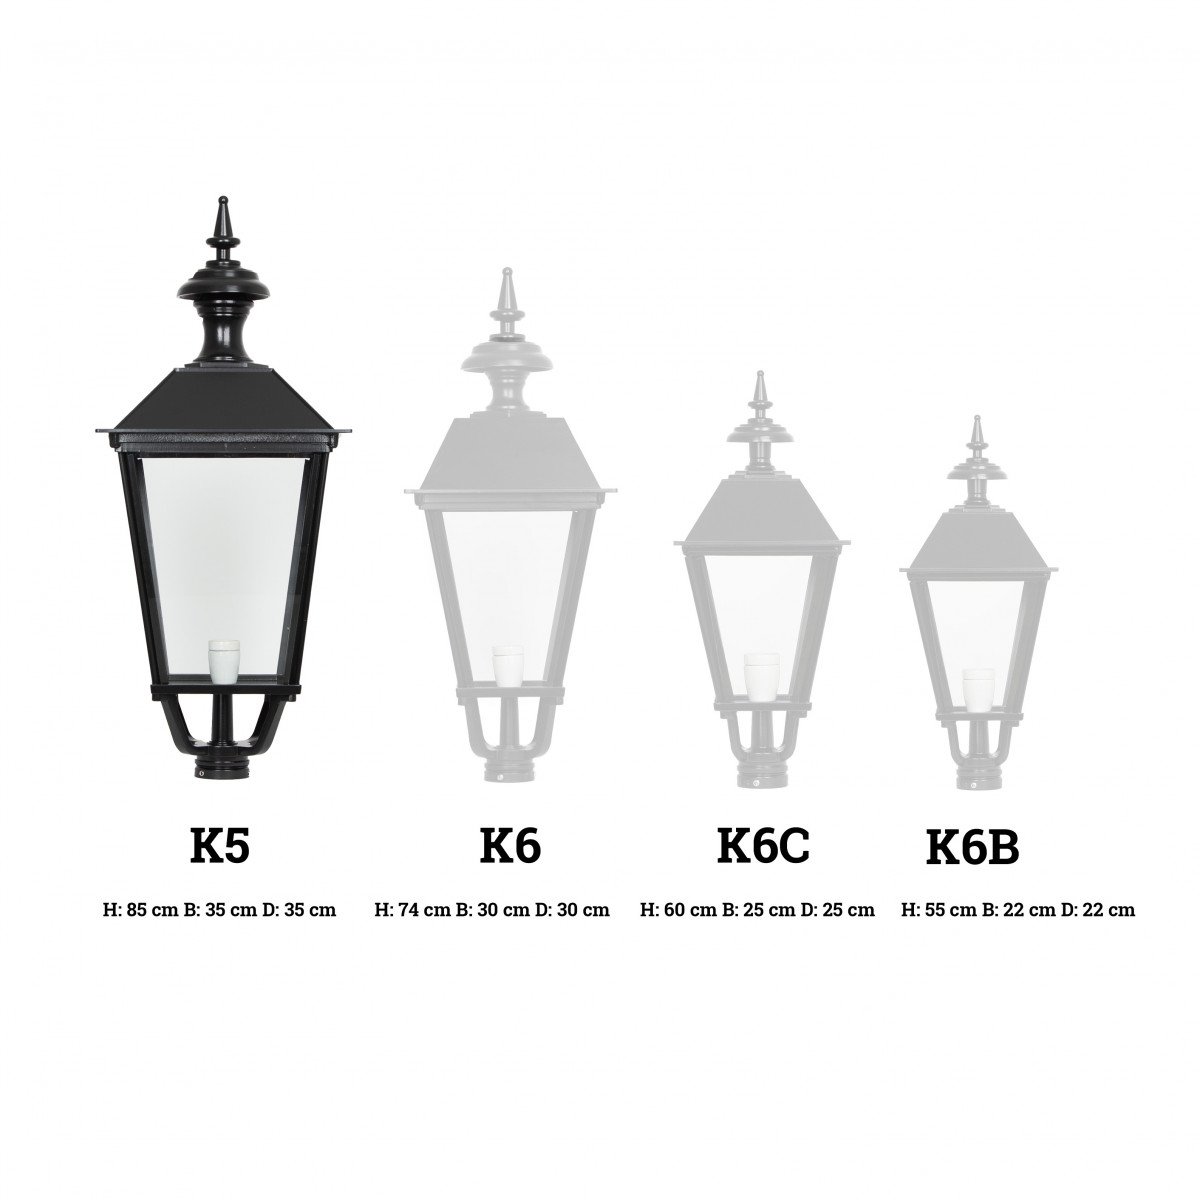 K5 post lantern